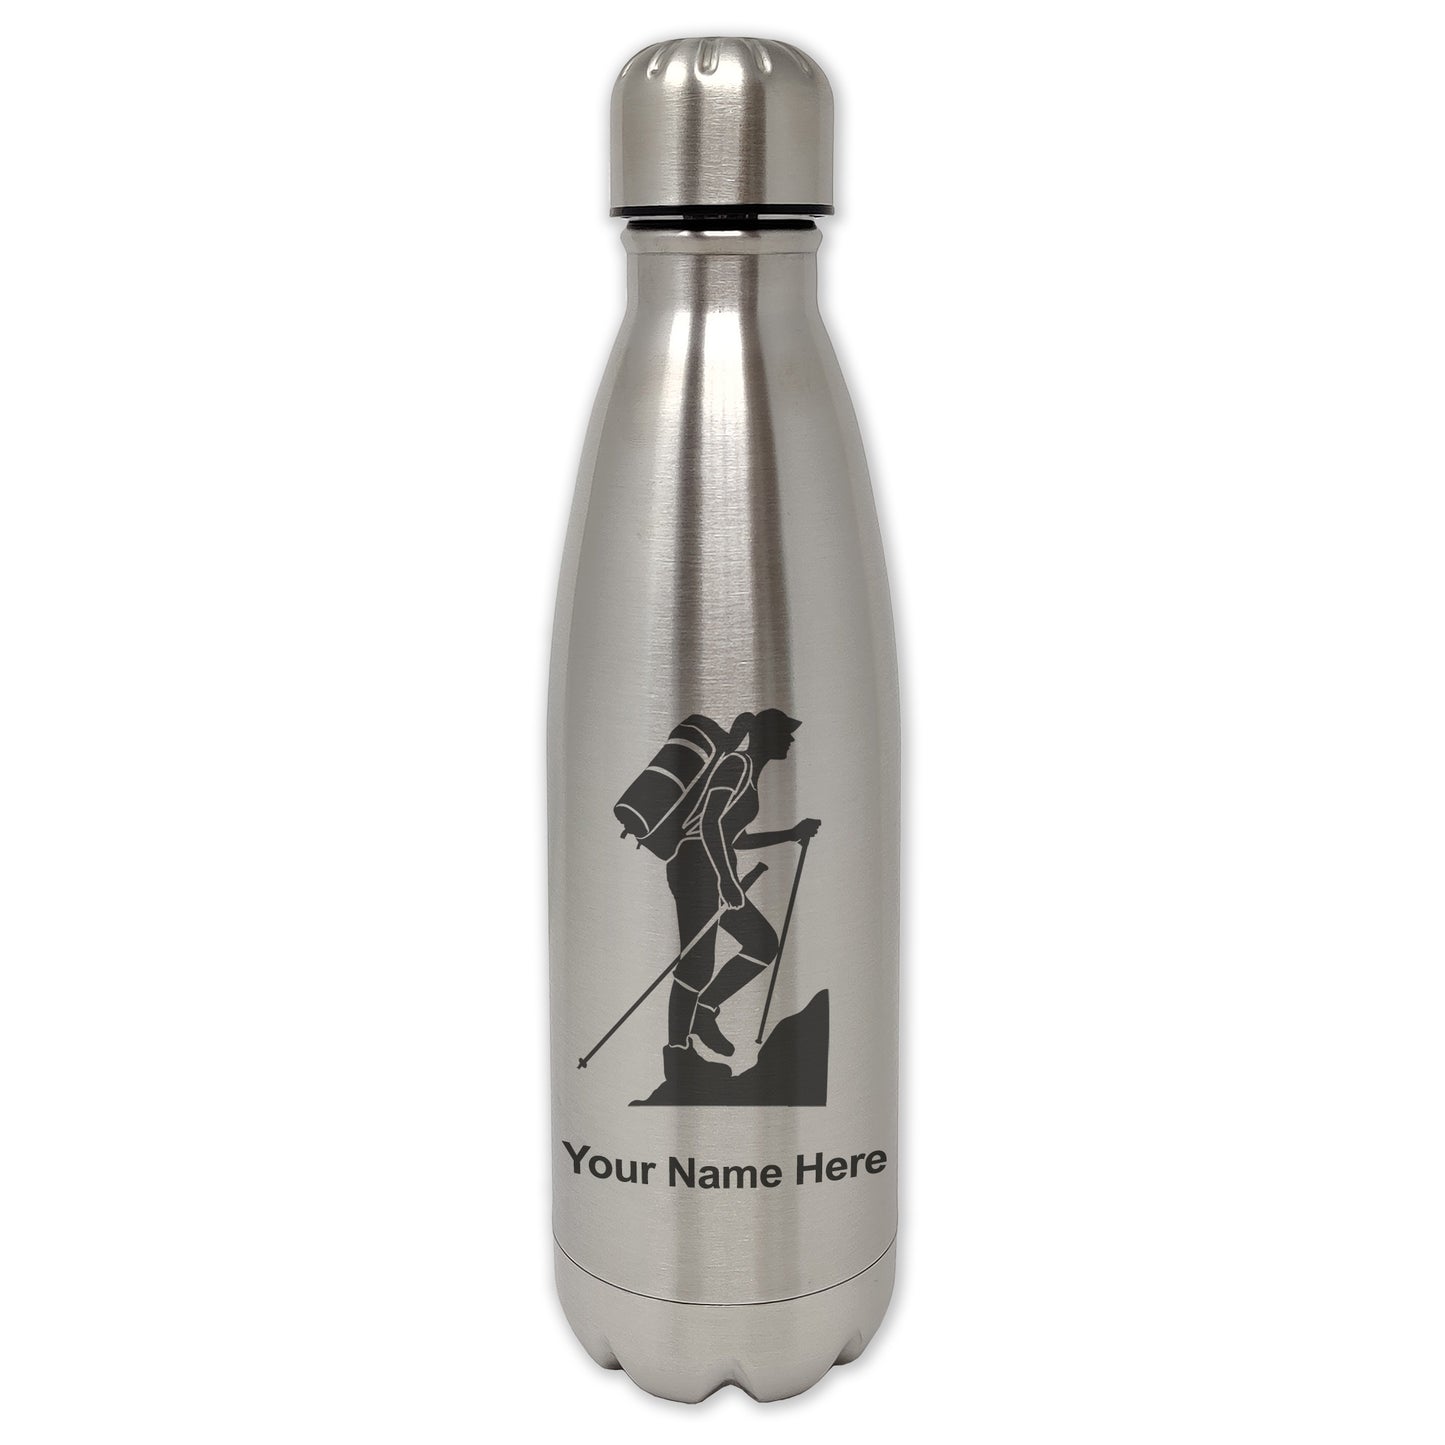 LaserGram Single Wall Water Bottle, Hiker Woman, Personalized Engraving Included